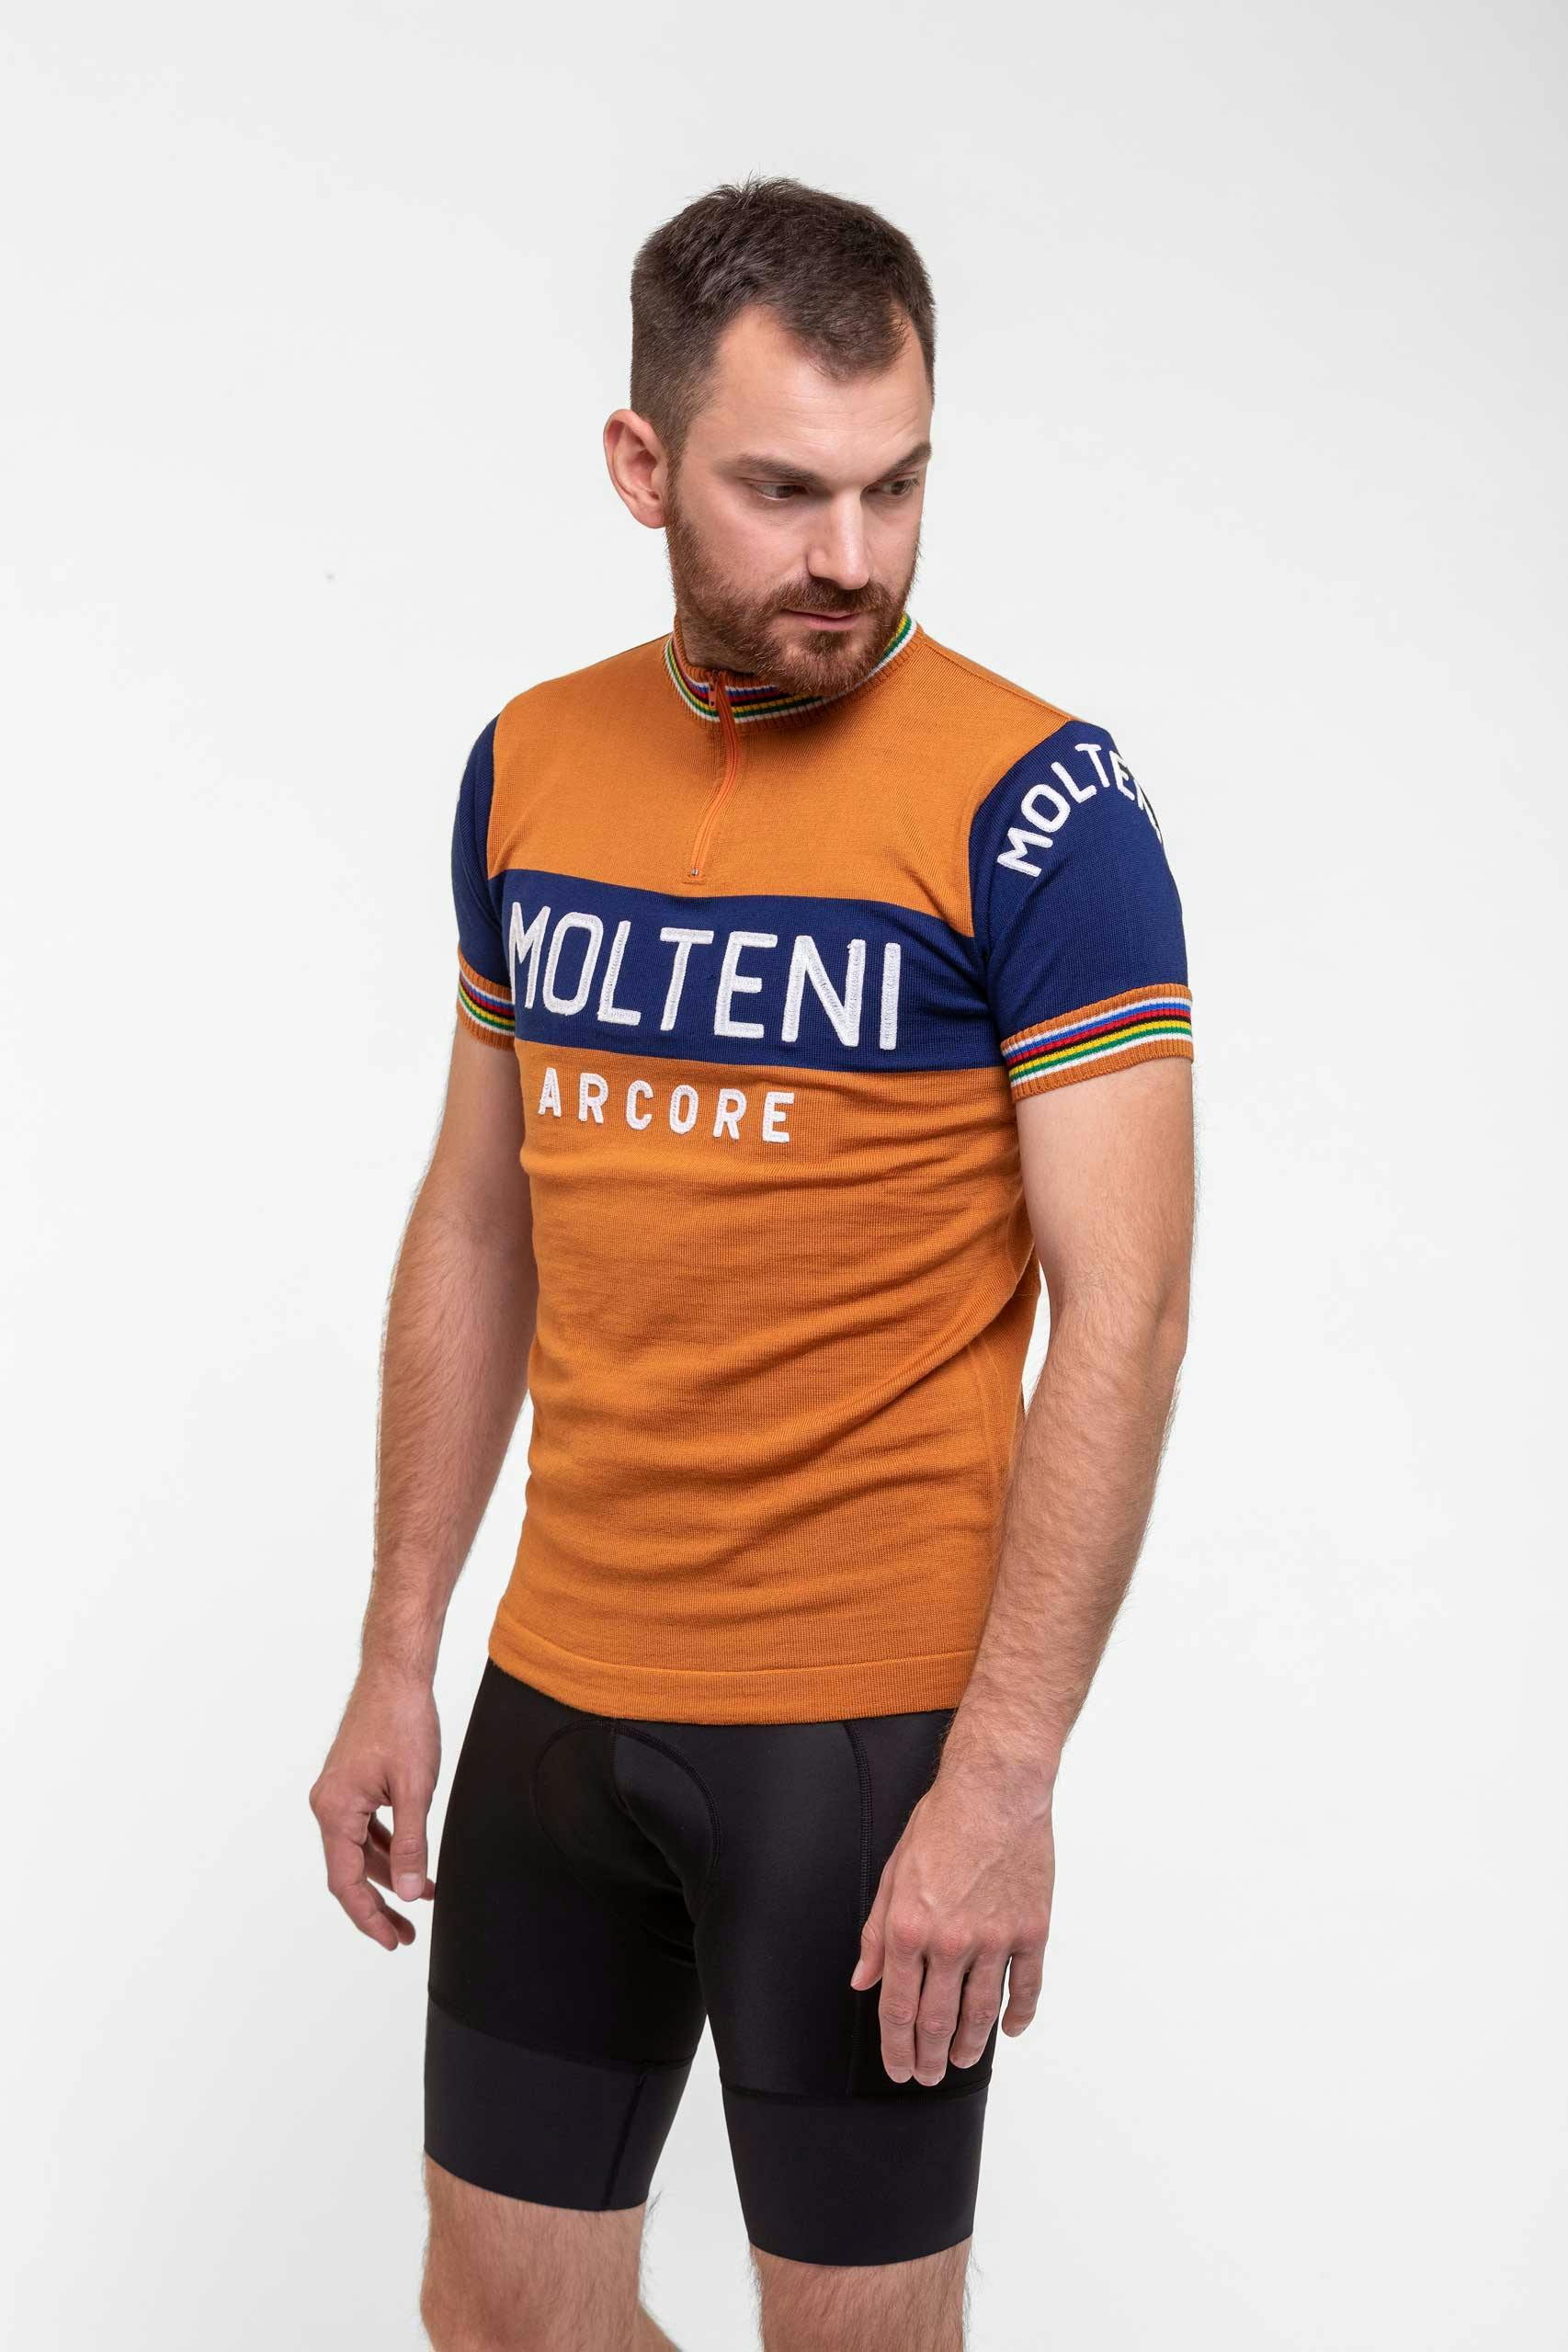 Classic Molteni Orange Short Sleeve Bicycle Jersey